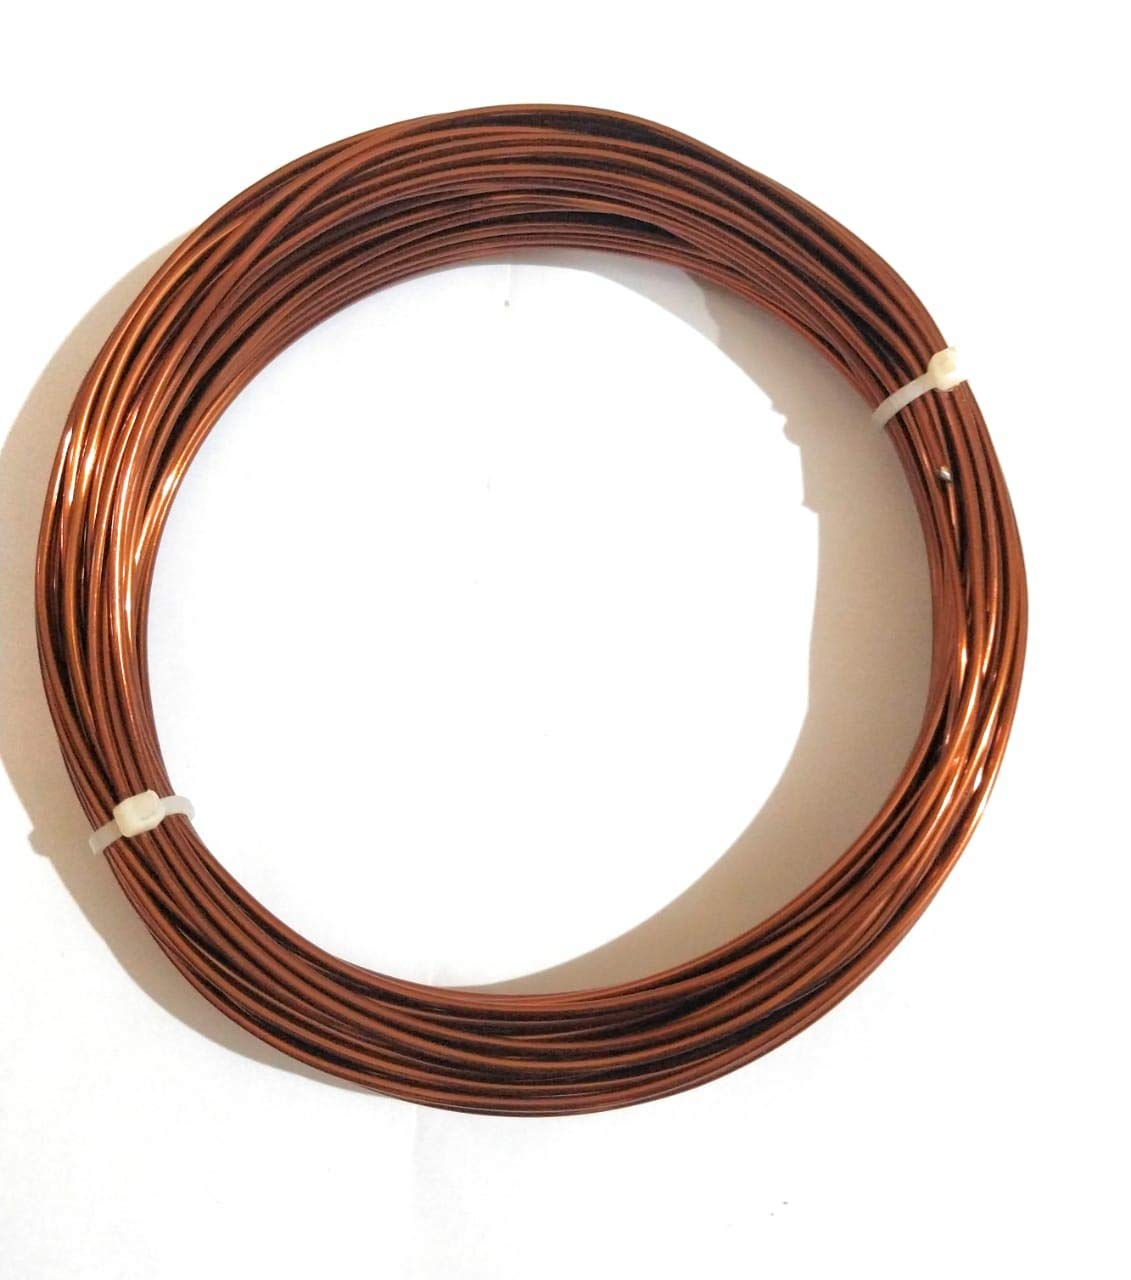 Multi Purpose Copper Wire, 22 Gauge, 5 m Length